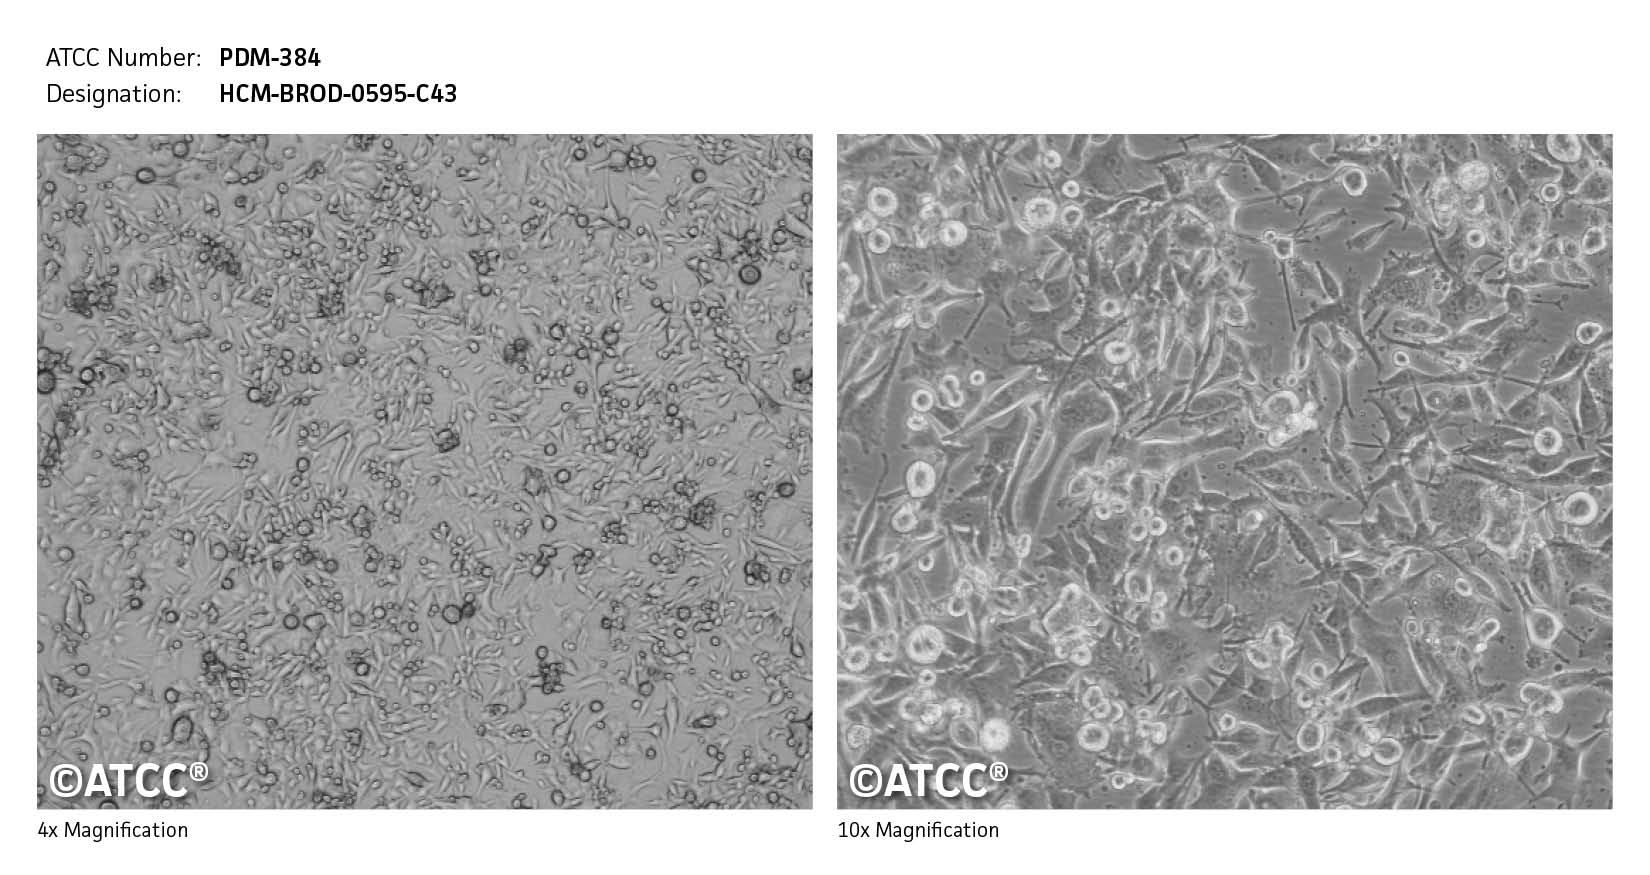 ATCC PDM-384 Cell Micrograph